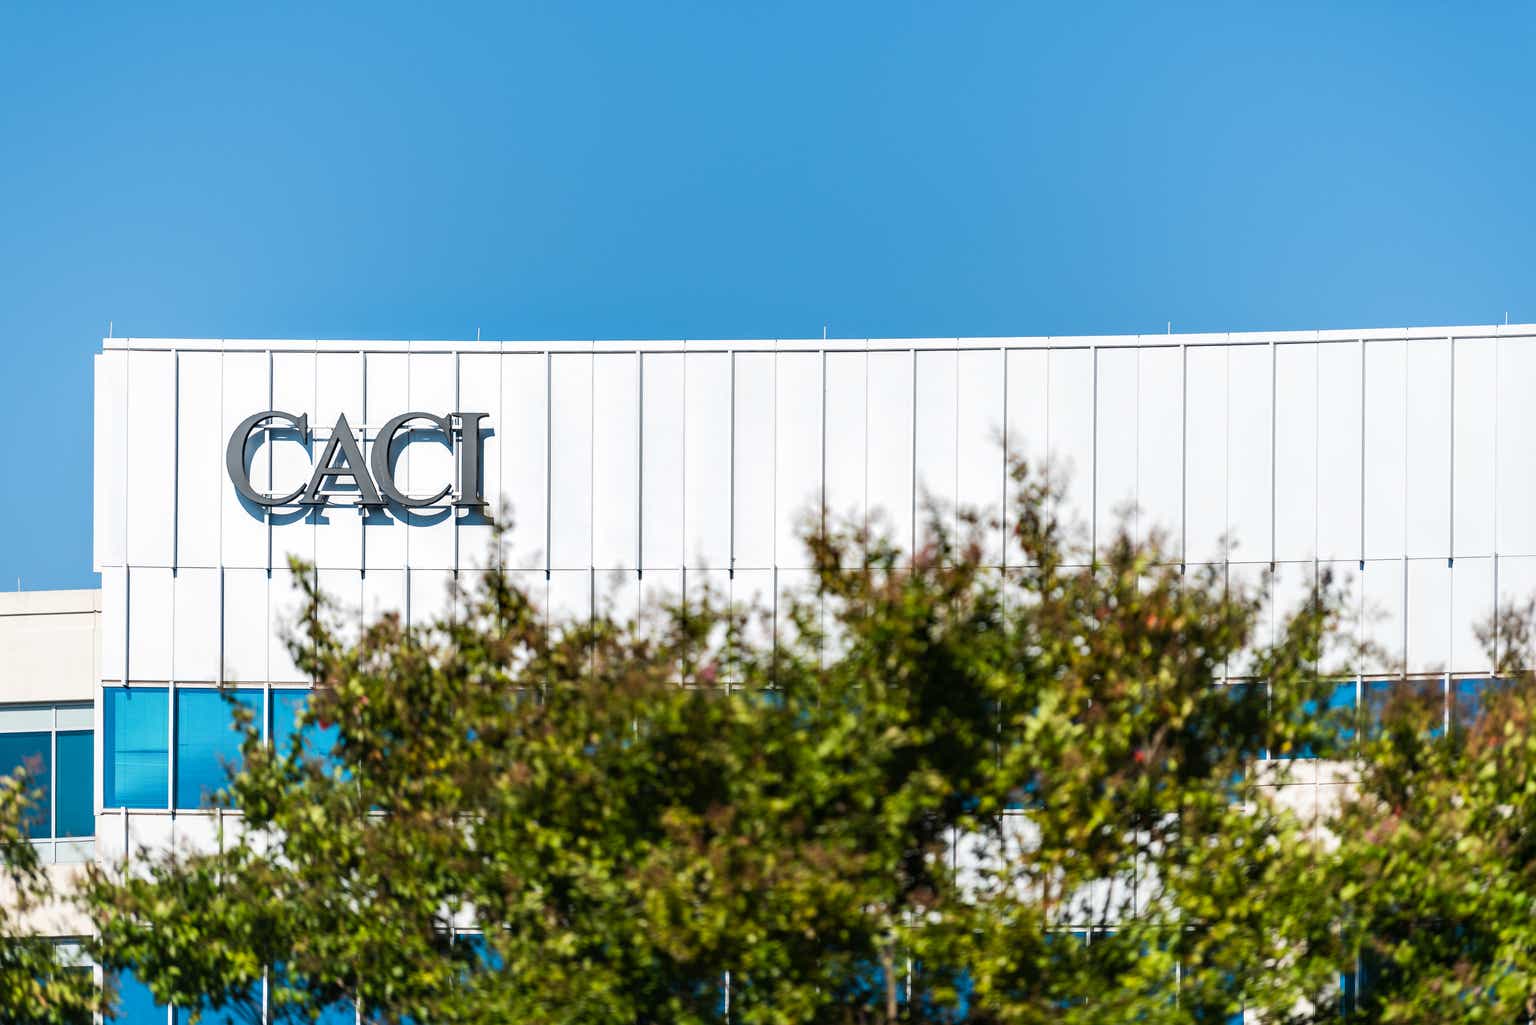 CACI International: Strong Company, But Already Fairly Valued